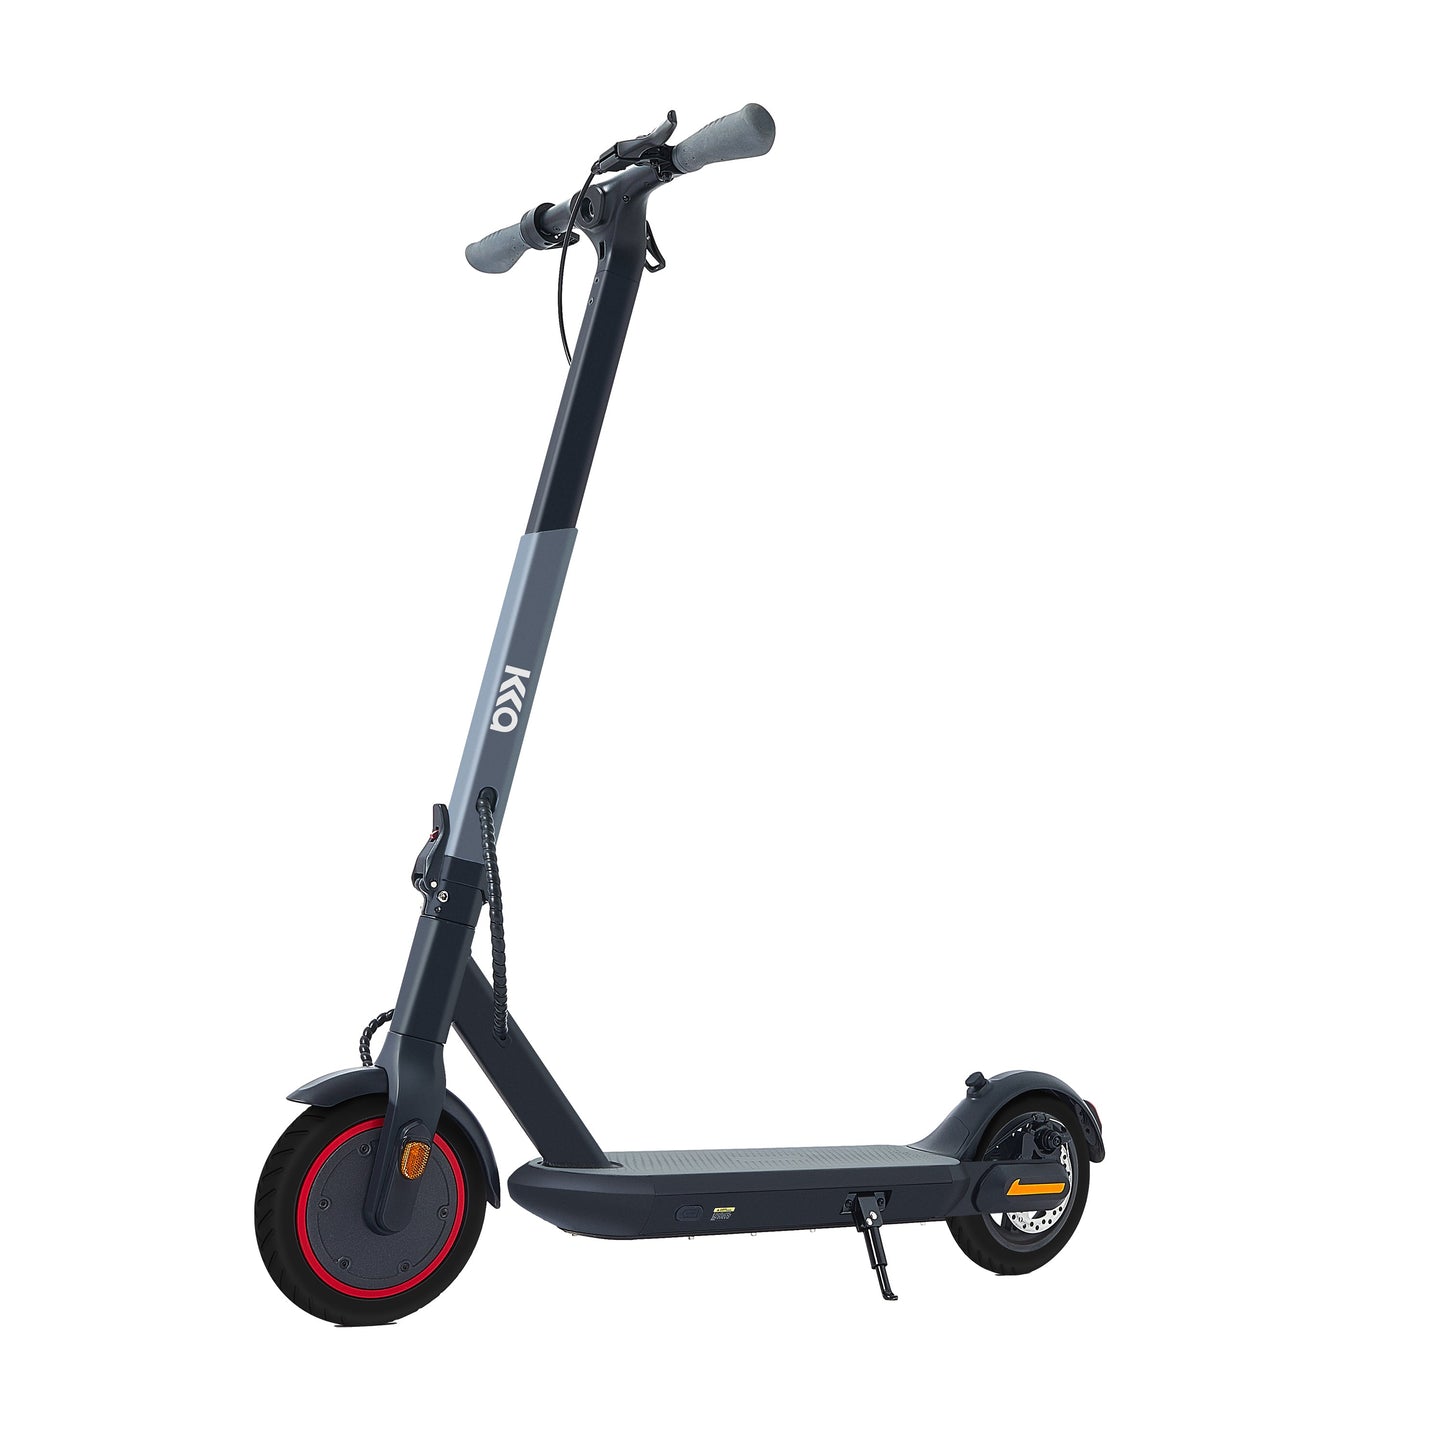 Freddo Toys X1 E-Scooter